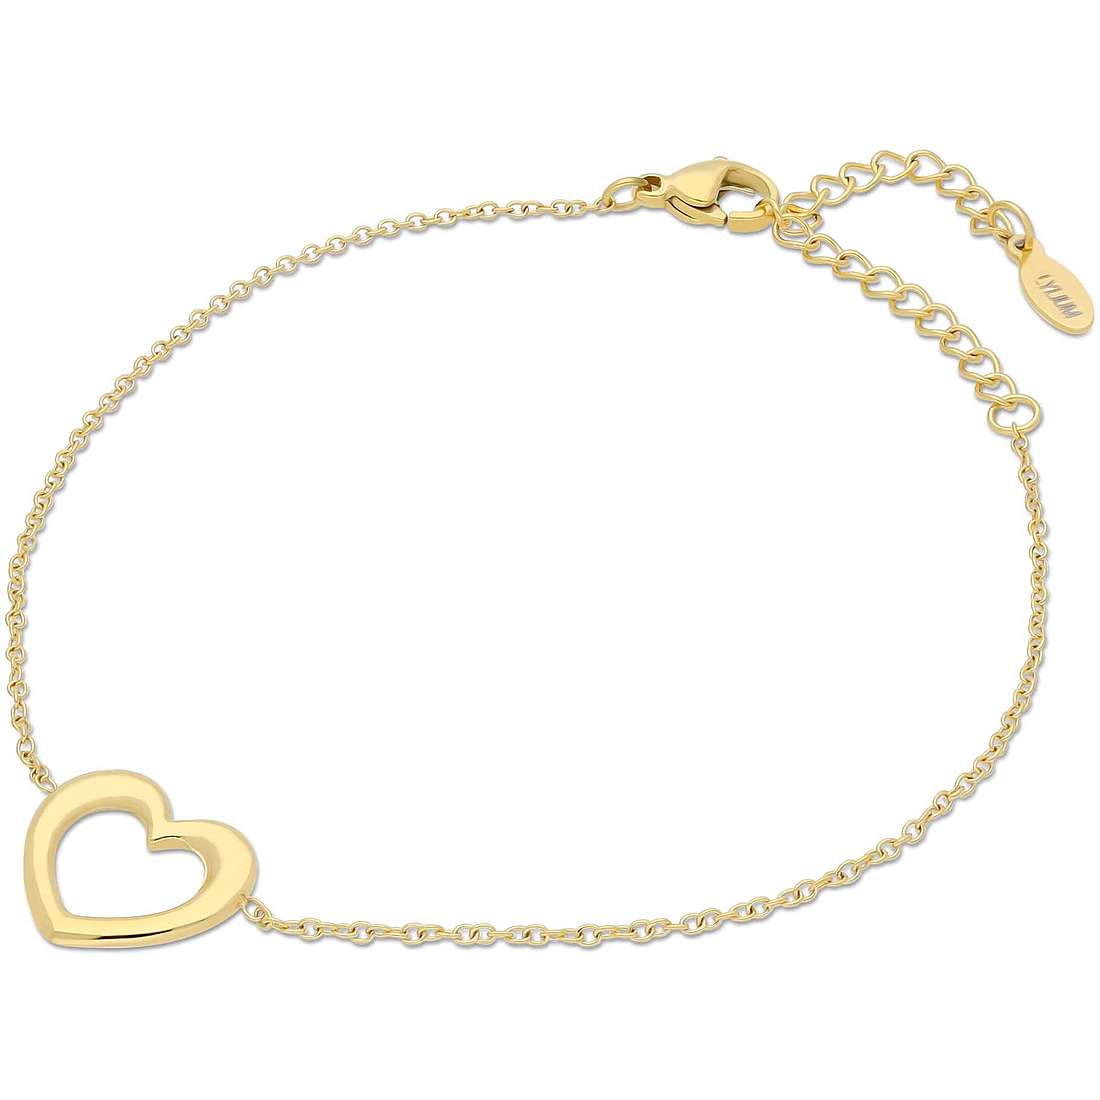 bracelet woman jewellery Lylium Promessa AC-B027G